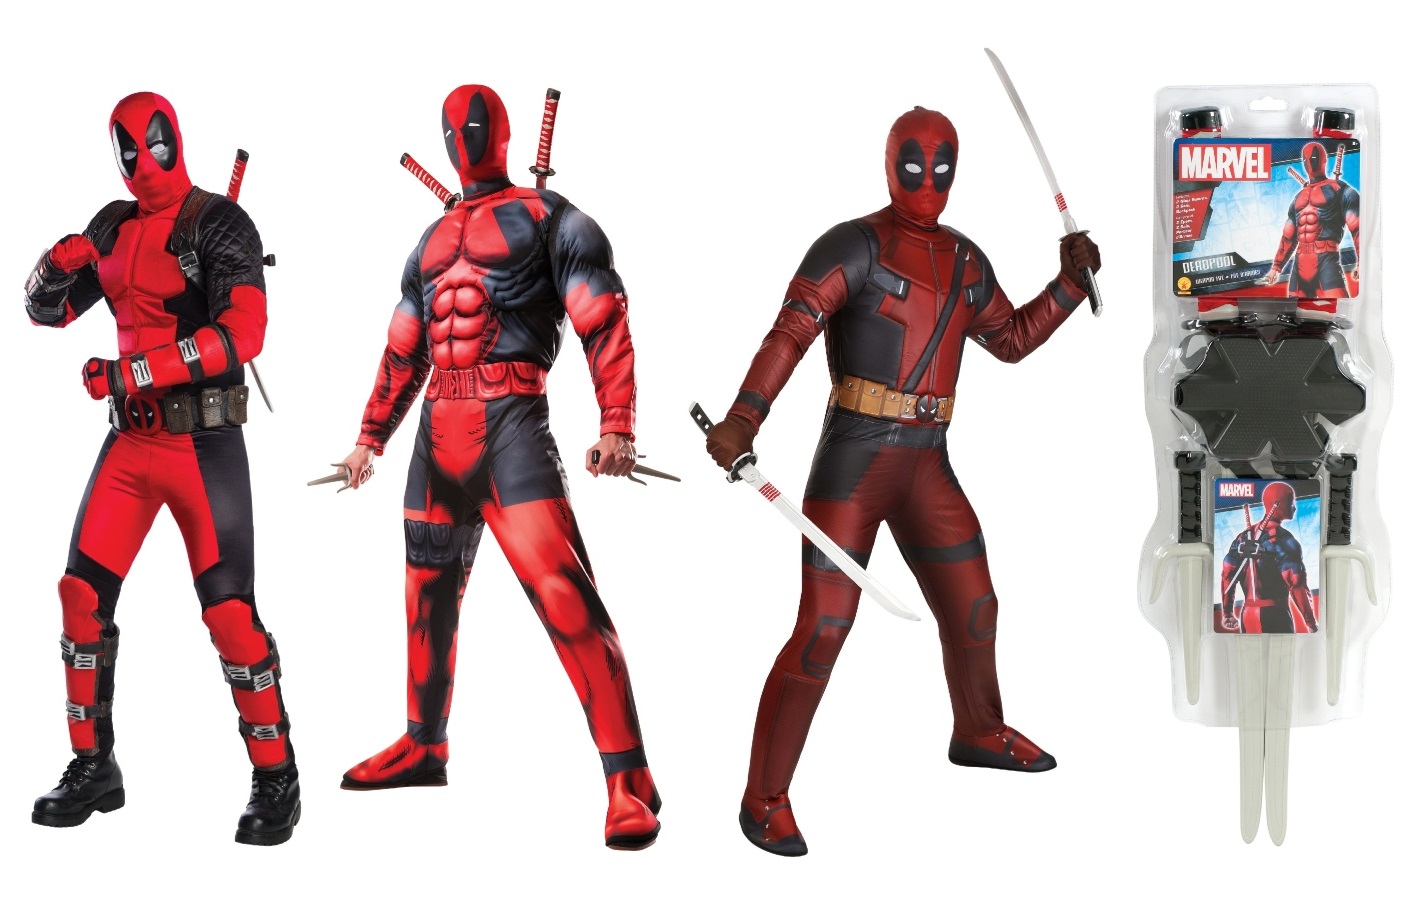 Deadpool Costumes